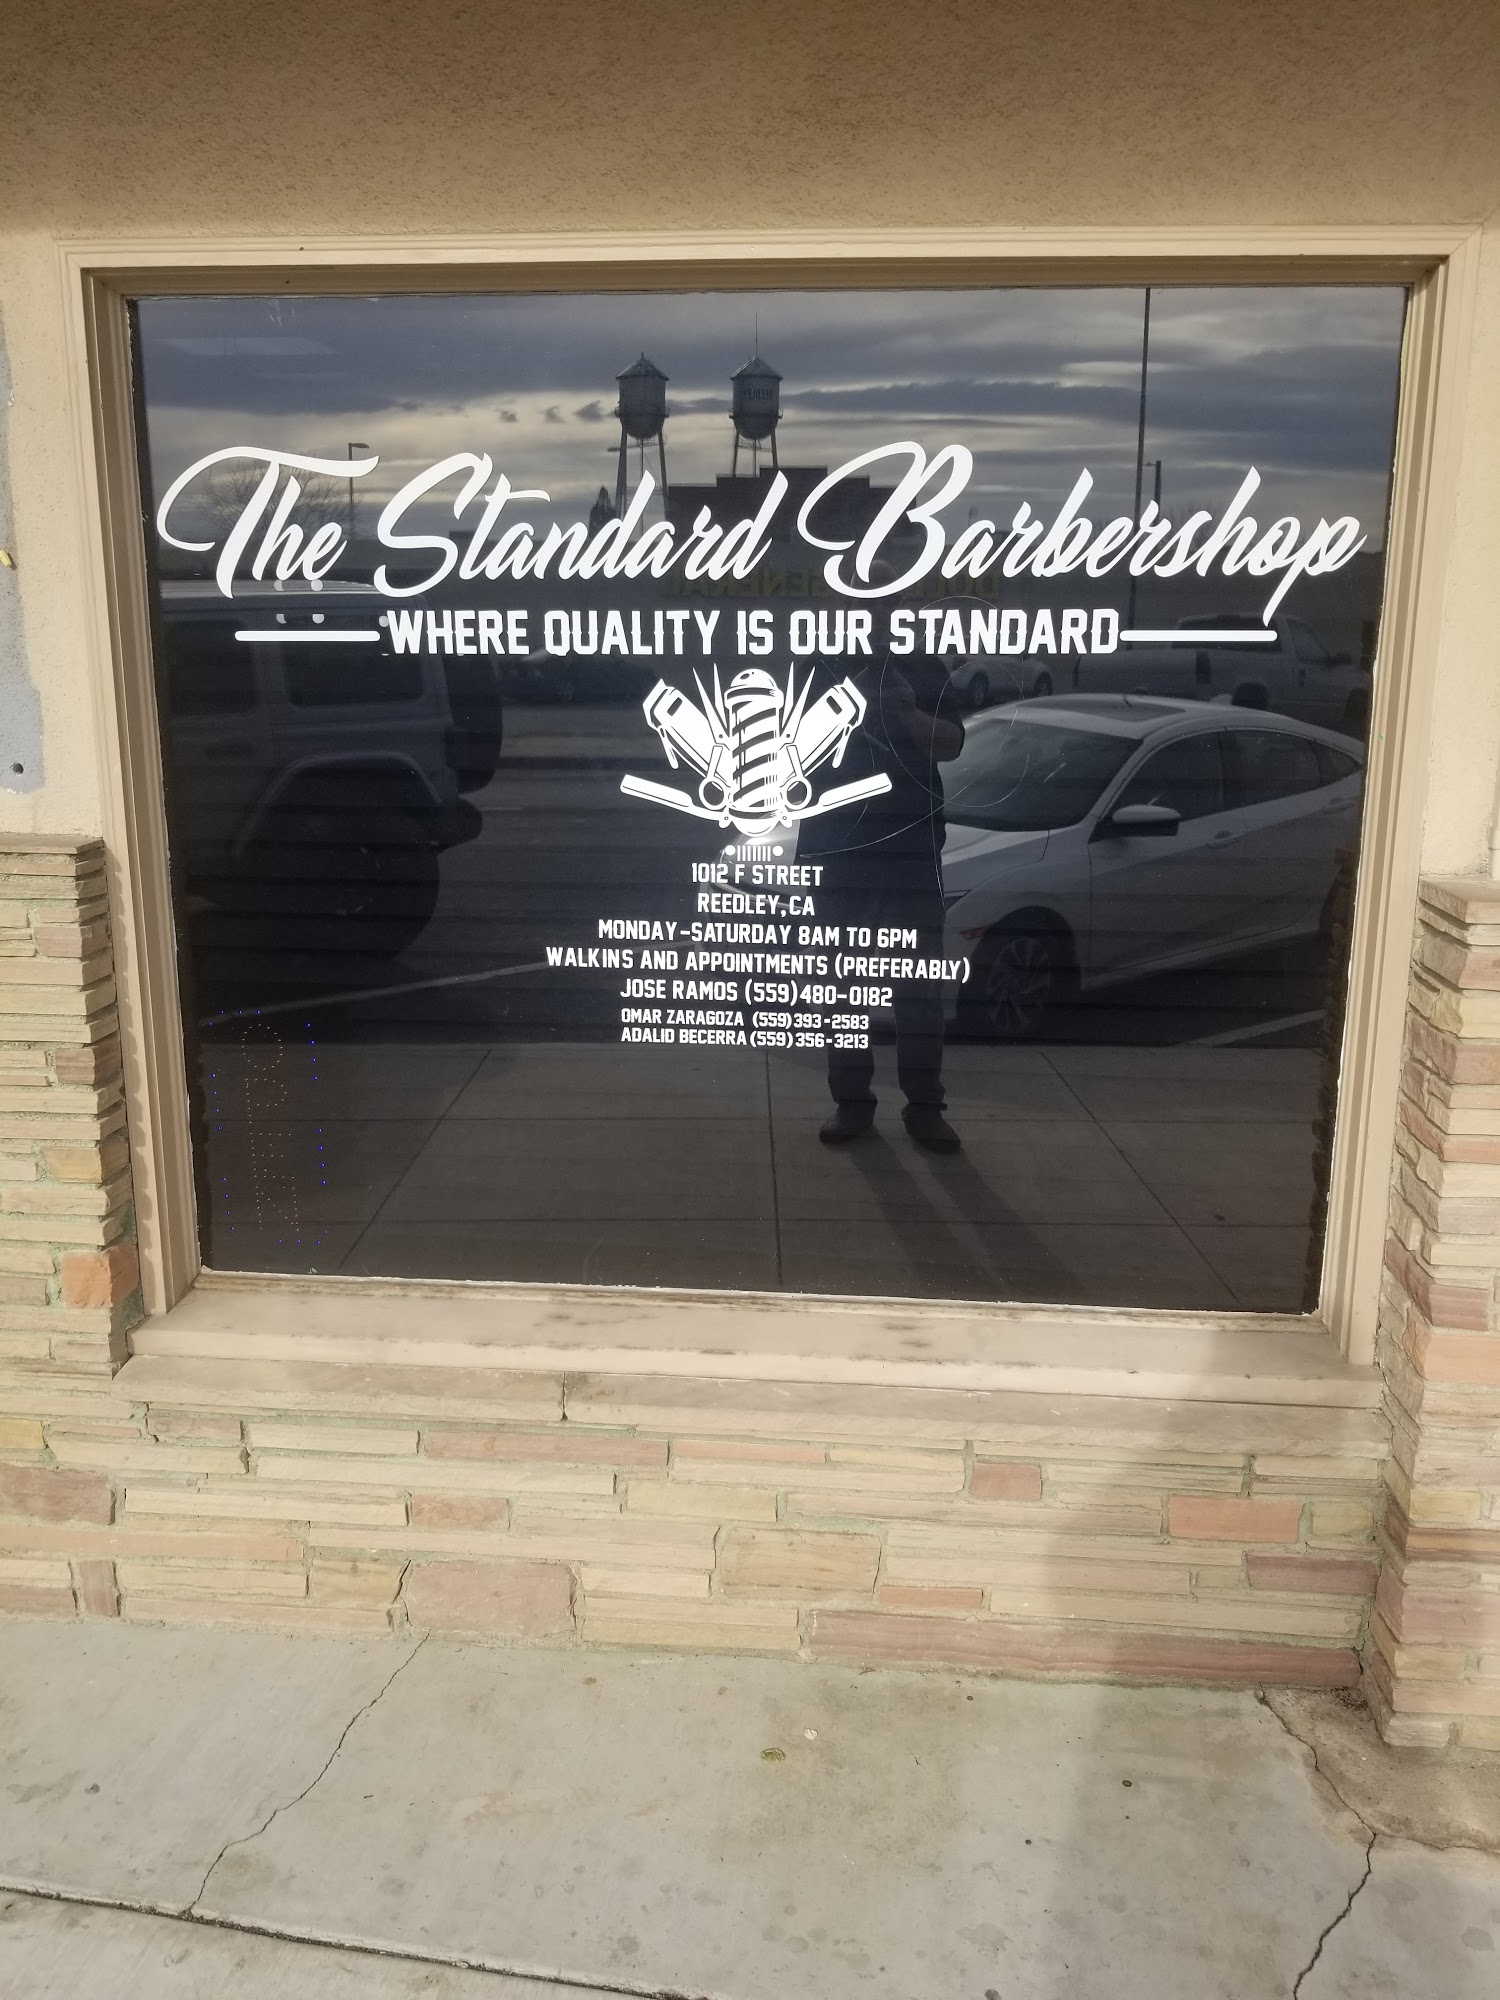 The Standard Barbershop